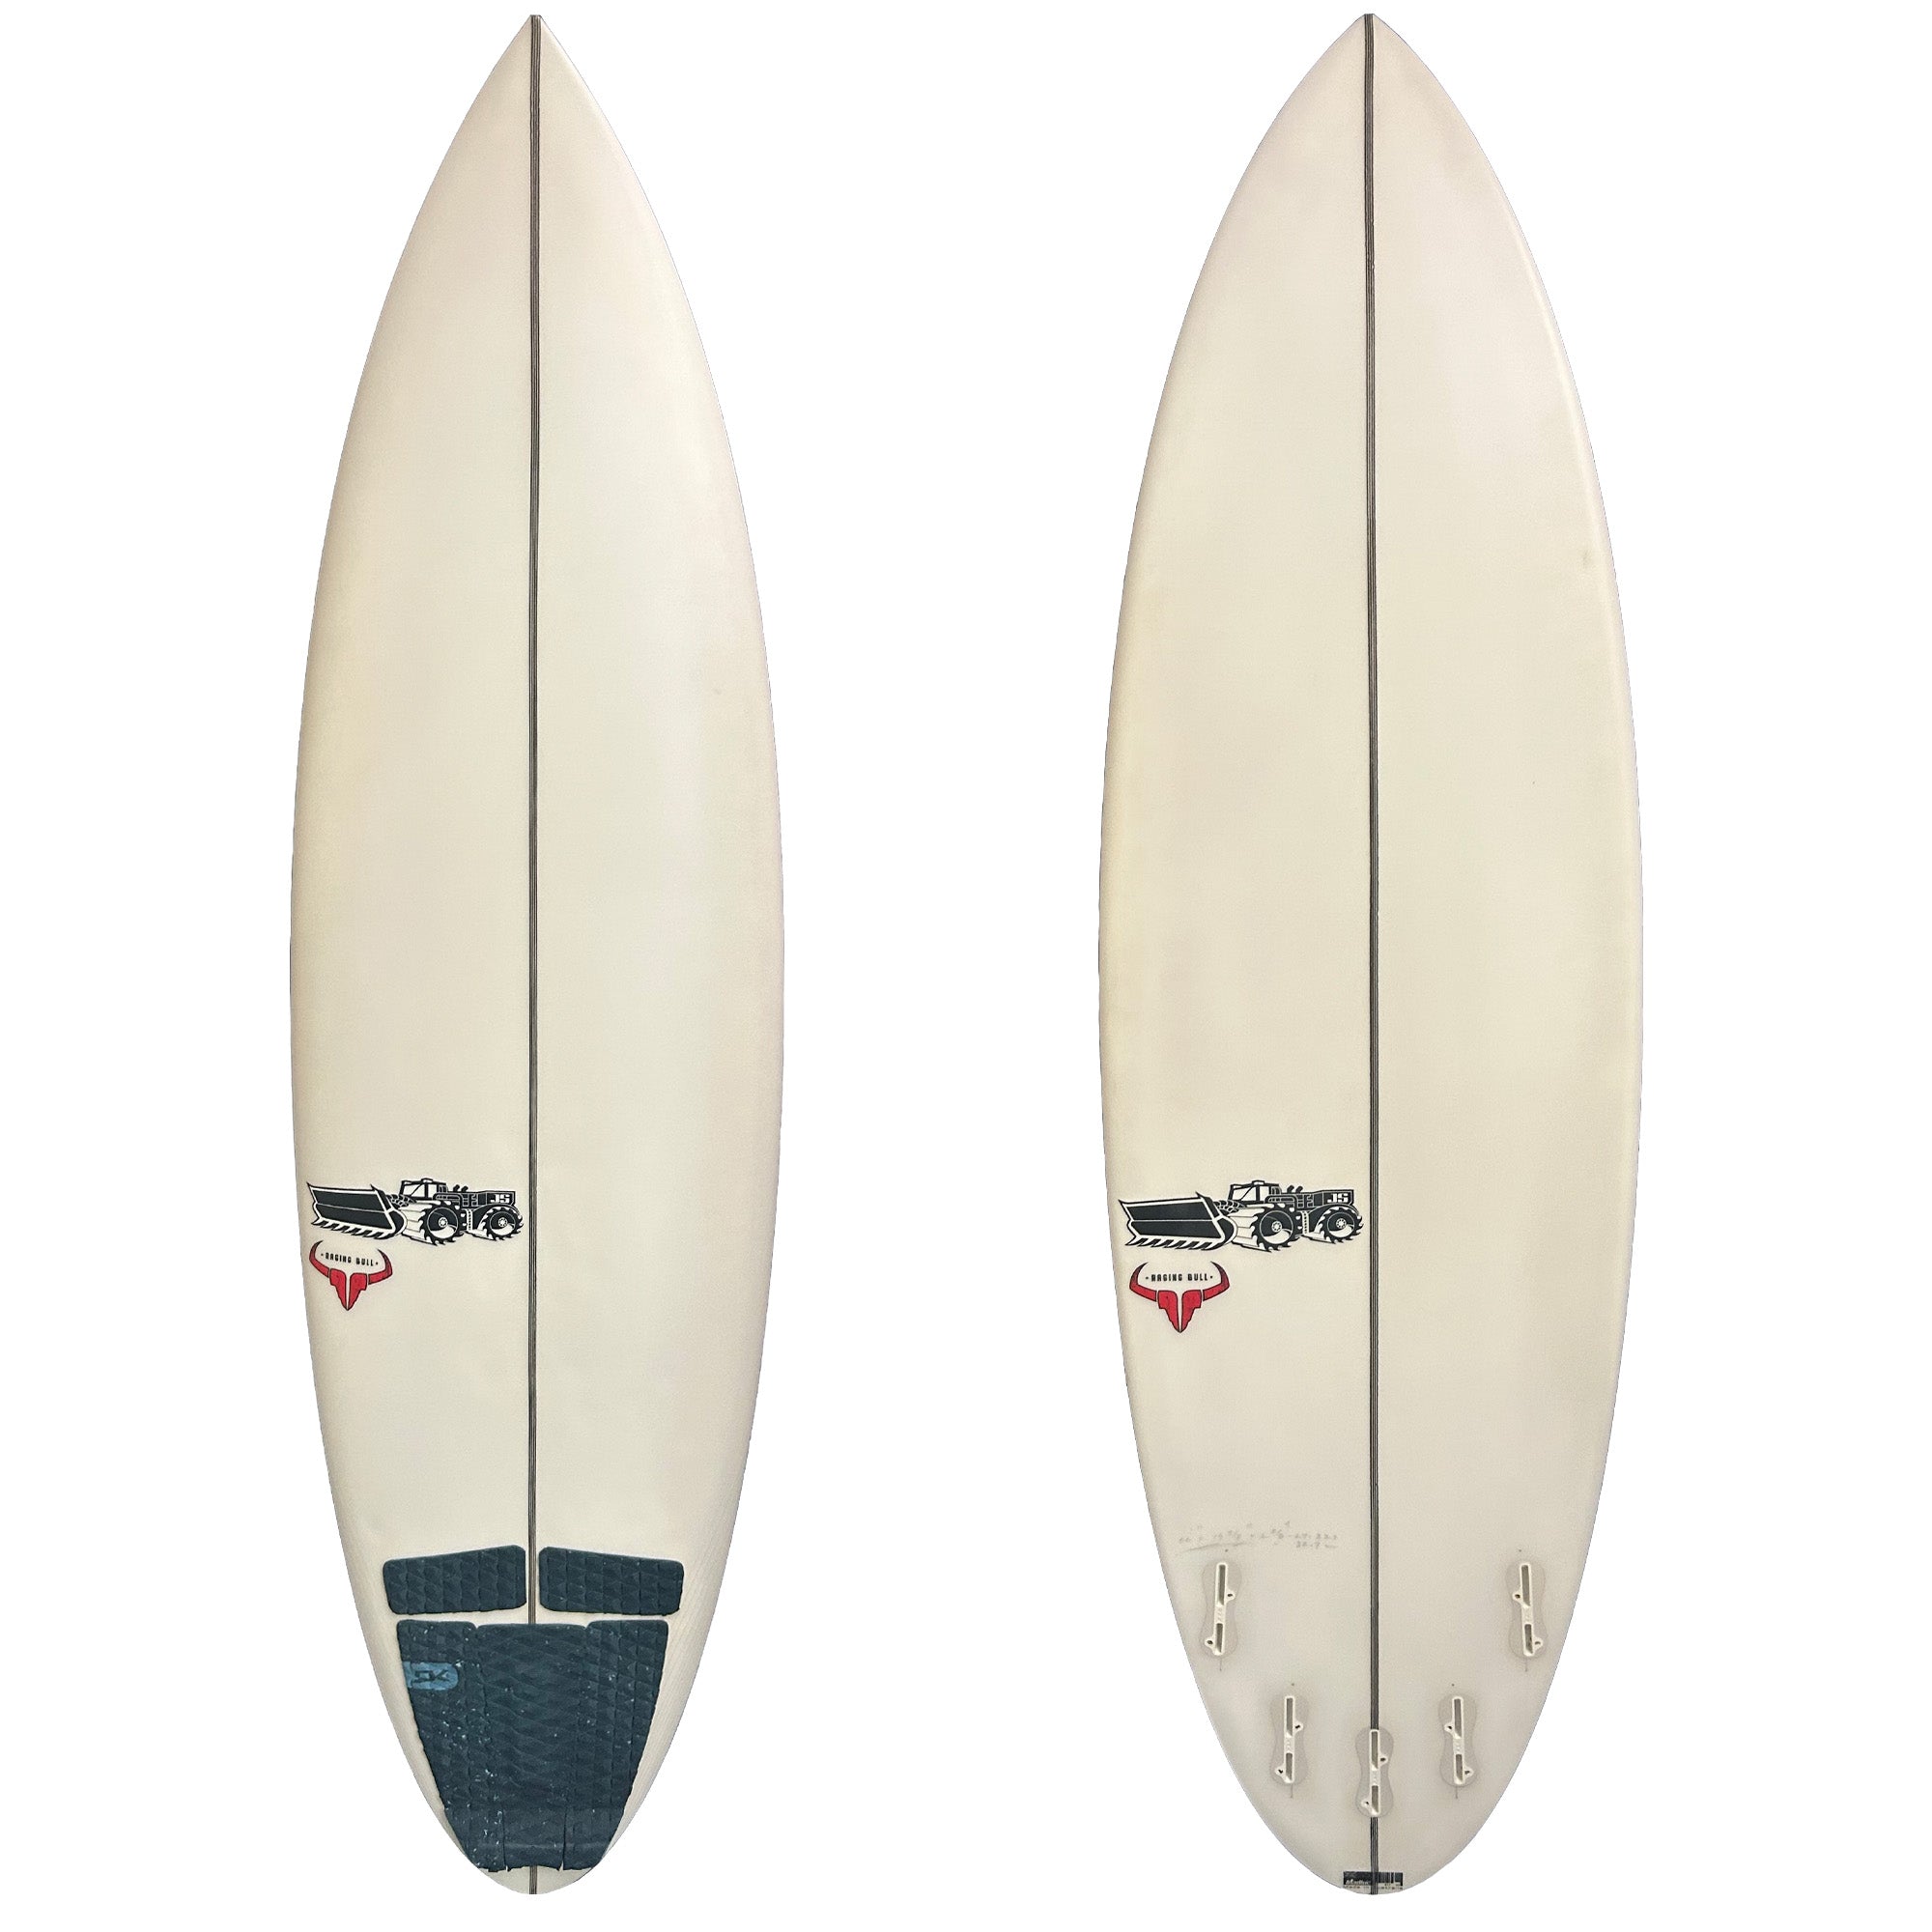 JS Raging Bull 6' Consignment Surfboard